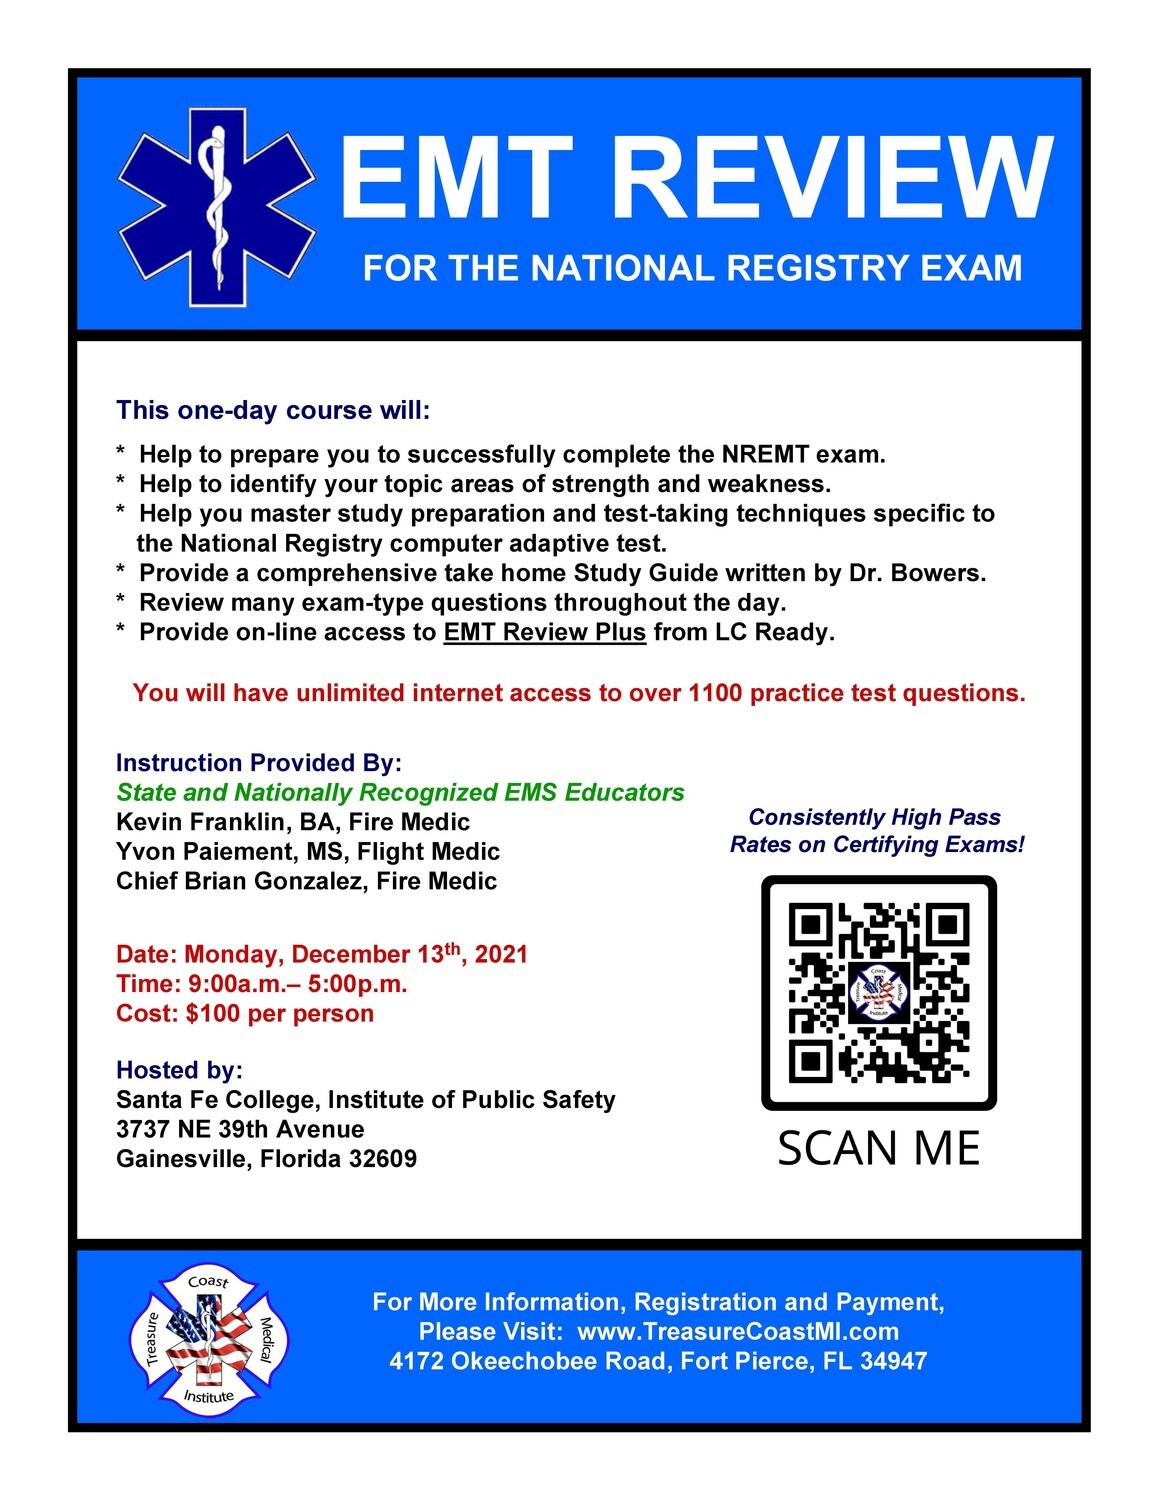 EMT Exam Review December 13th Gainesville